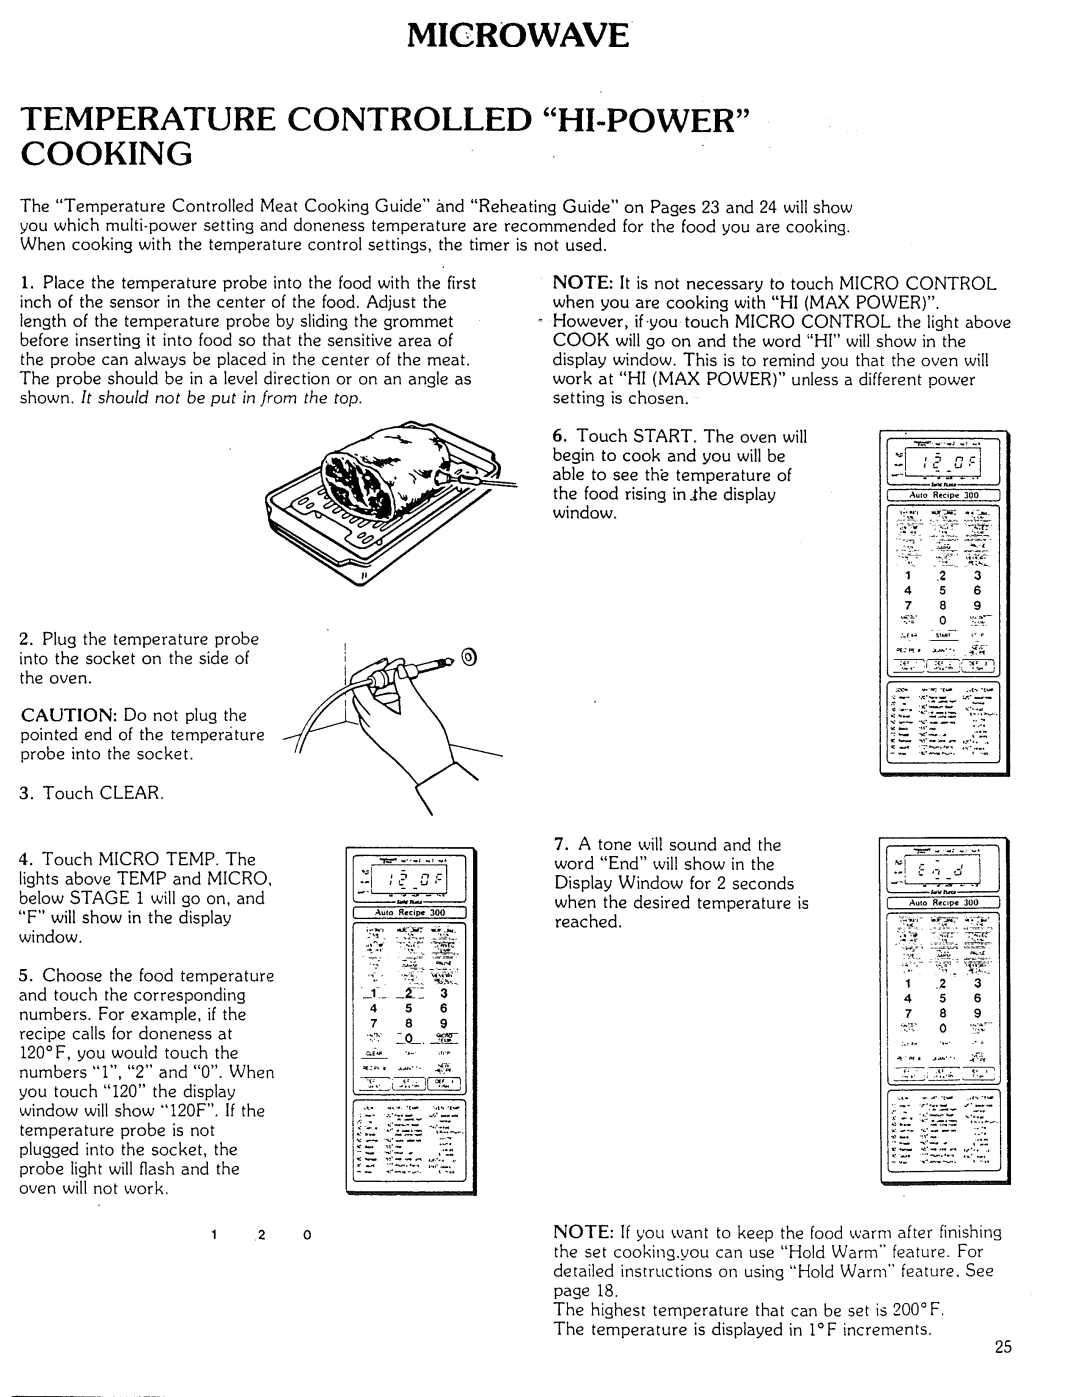 Kenmore Microwave Oven manual Temperature Controlled Hi-Powercooking 